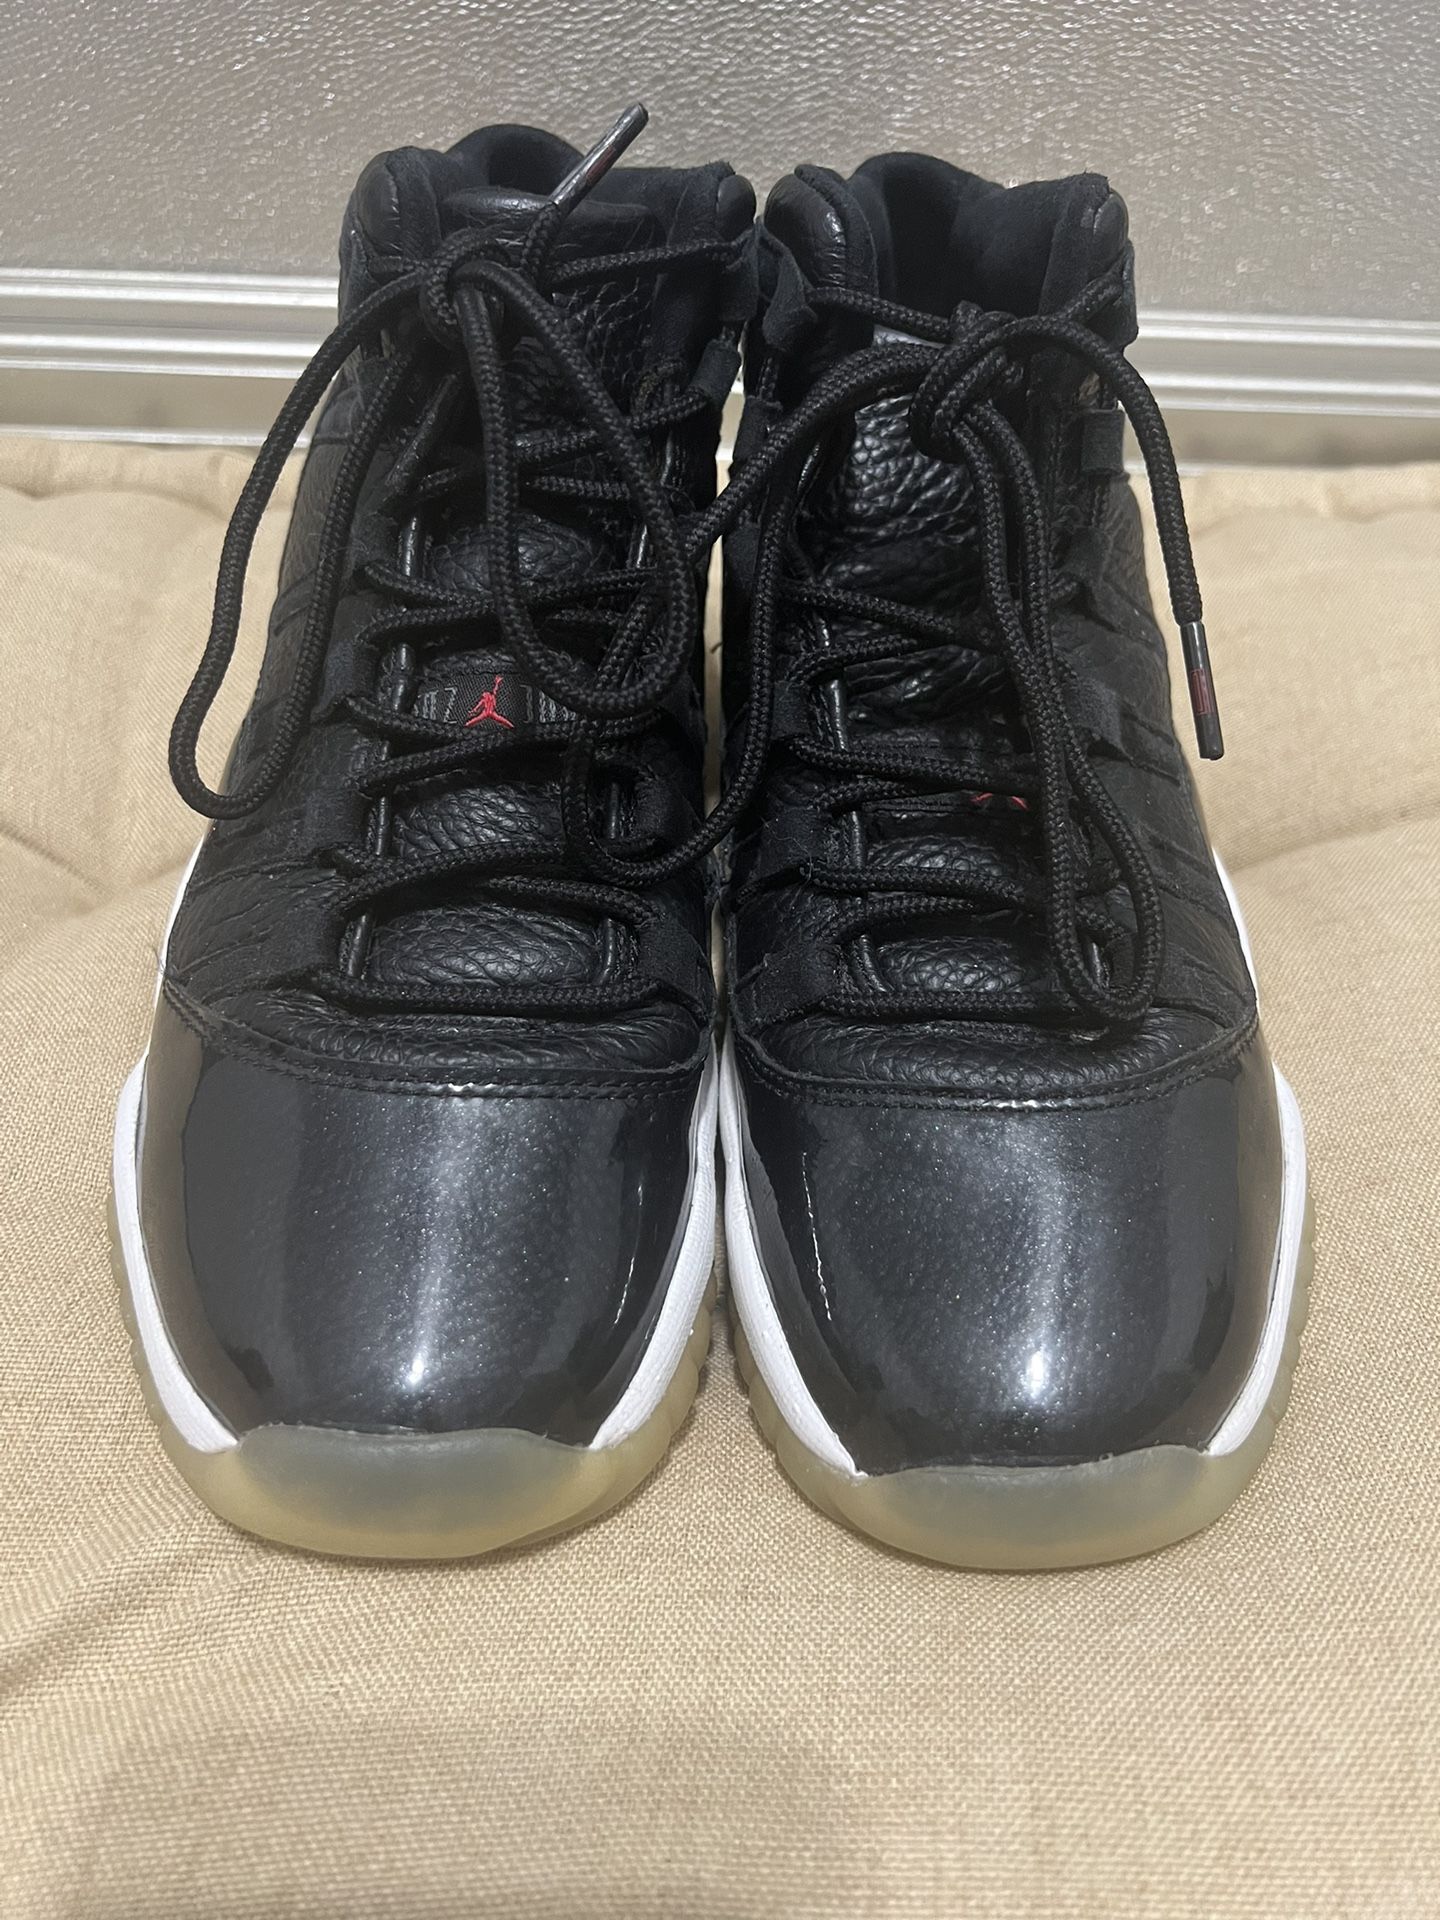 Black & White Air Nike Jordan Retro’s